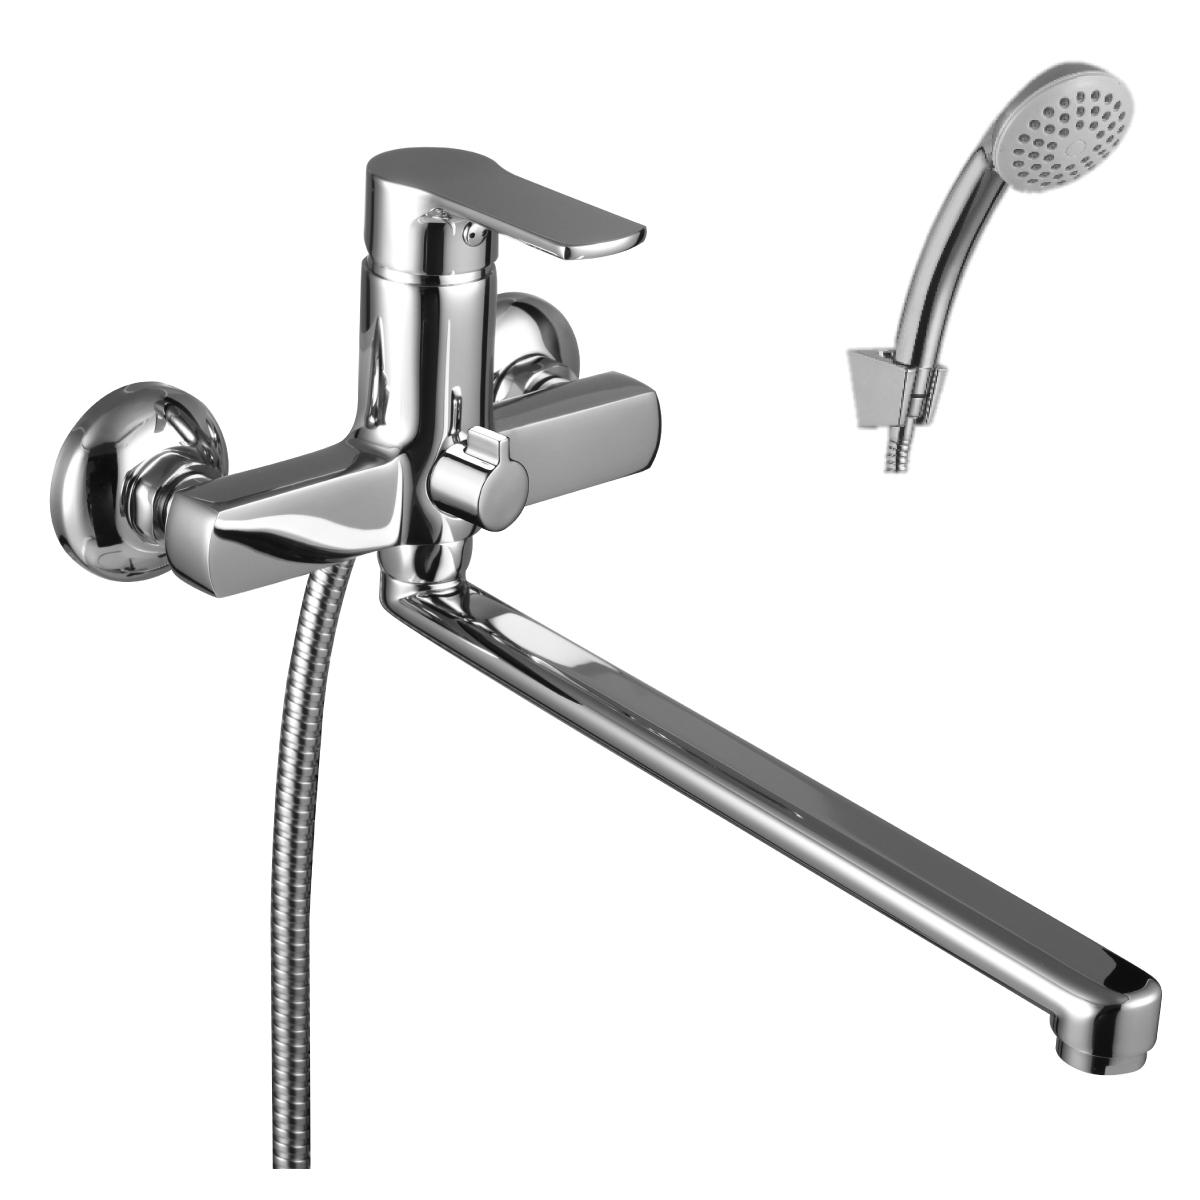 LM1551C Washbasin/bath faucet
with 300 mm flat swivel spout